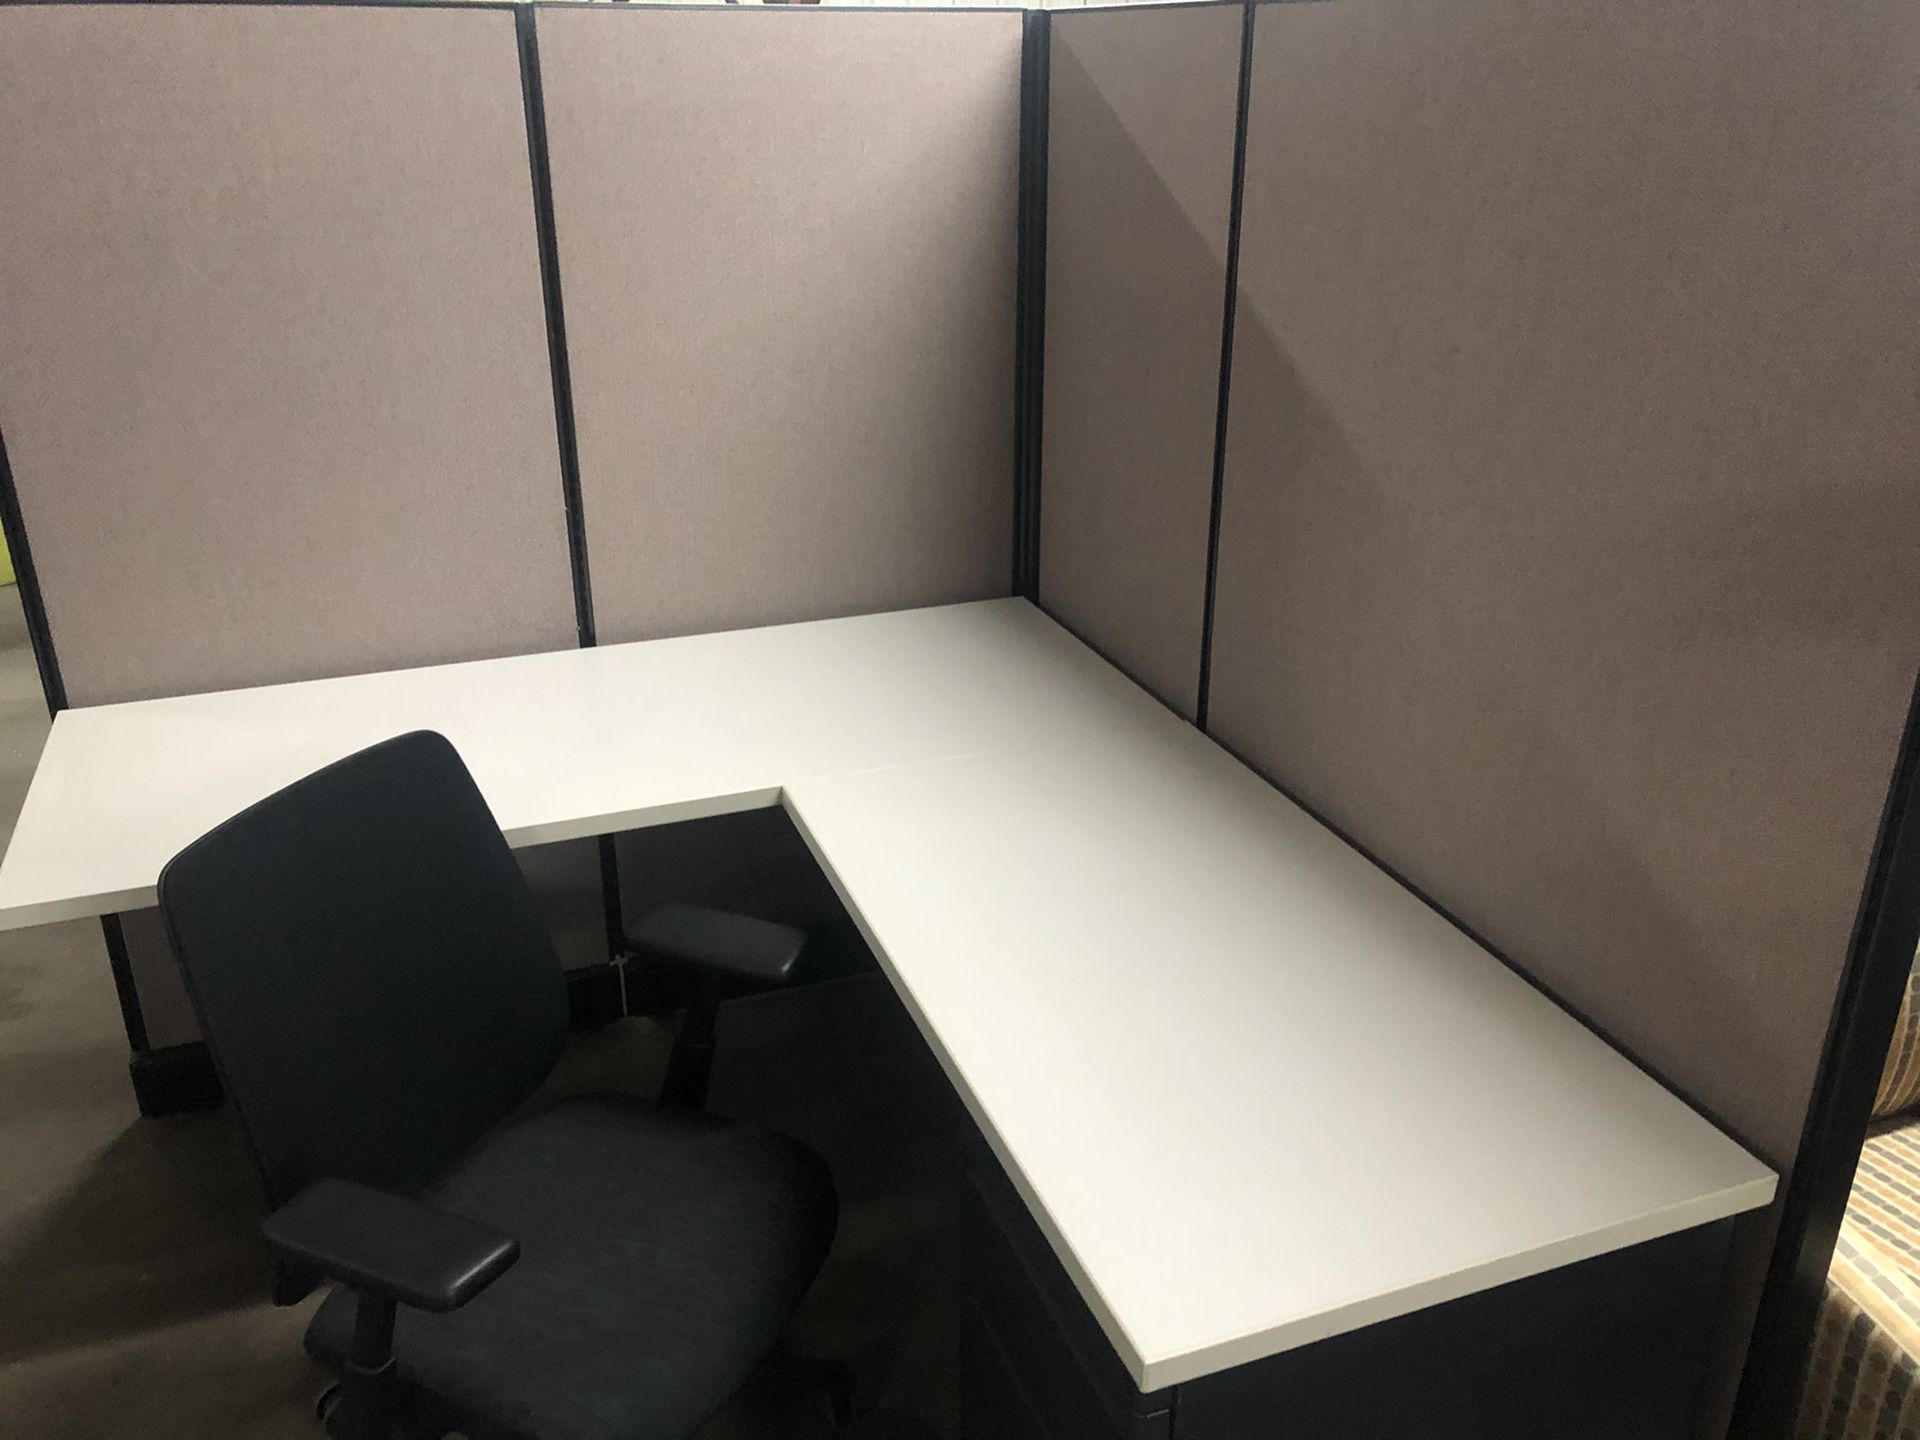 HM office cubicles 5’ 5’x5’6”